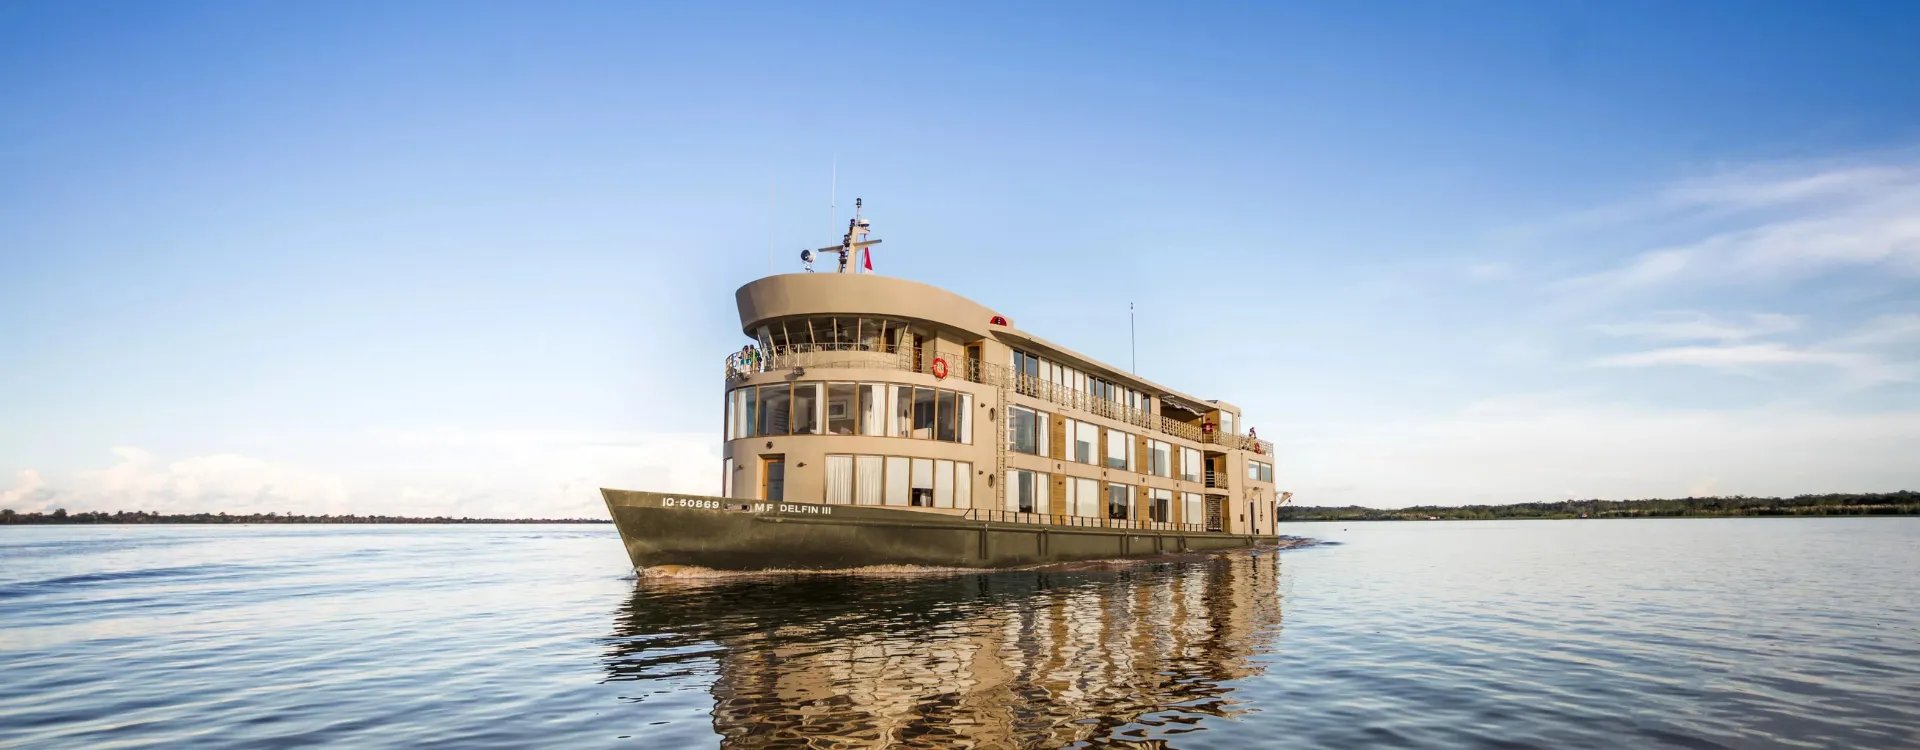 small luxury cruise ship on the peruvian amazon river